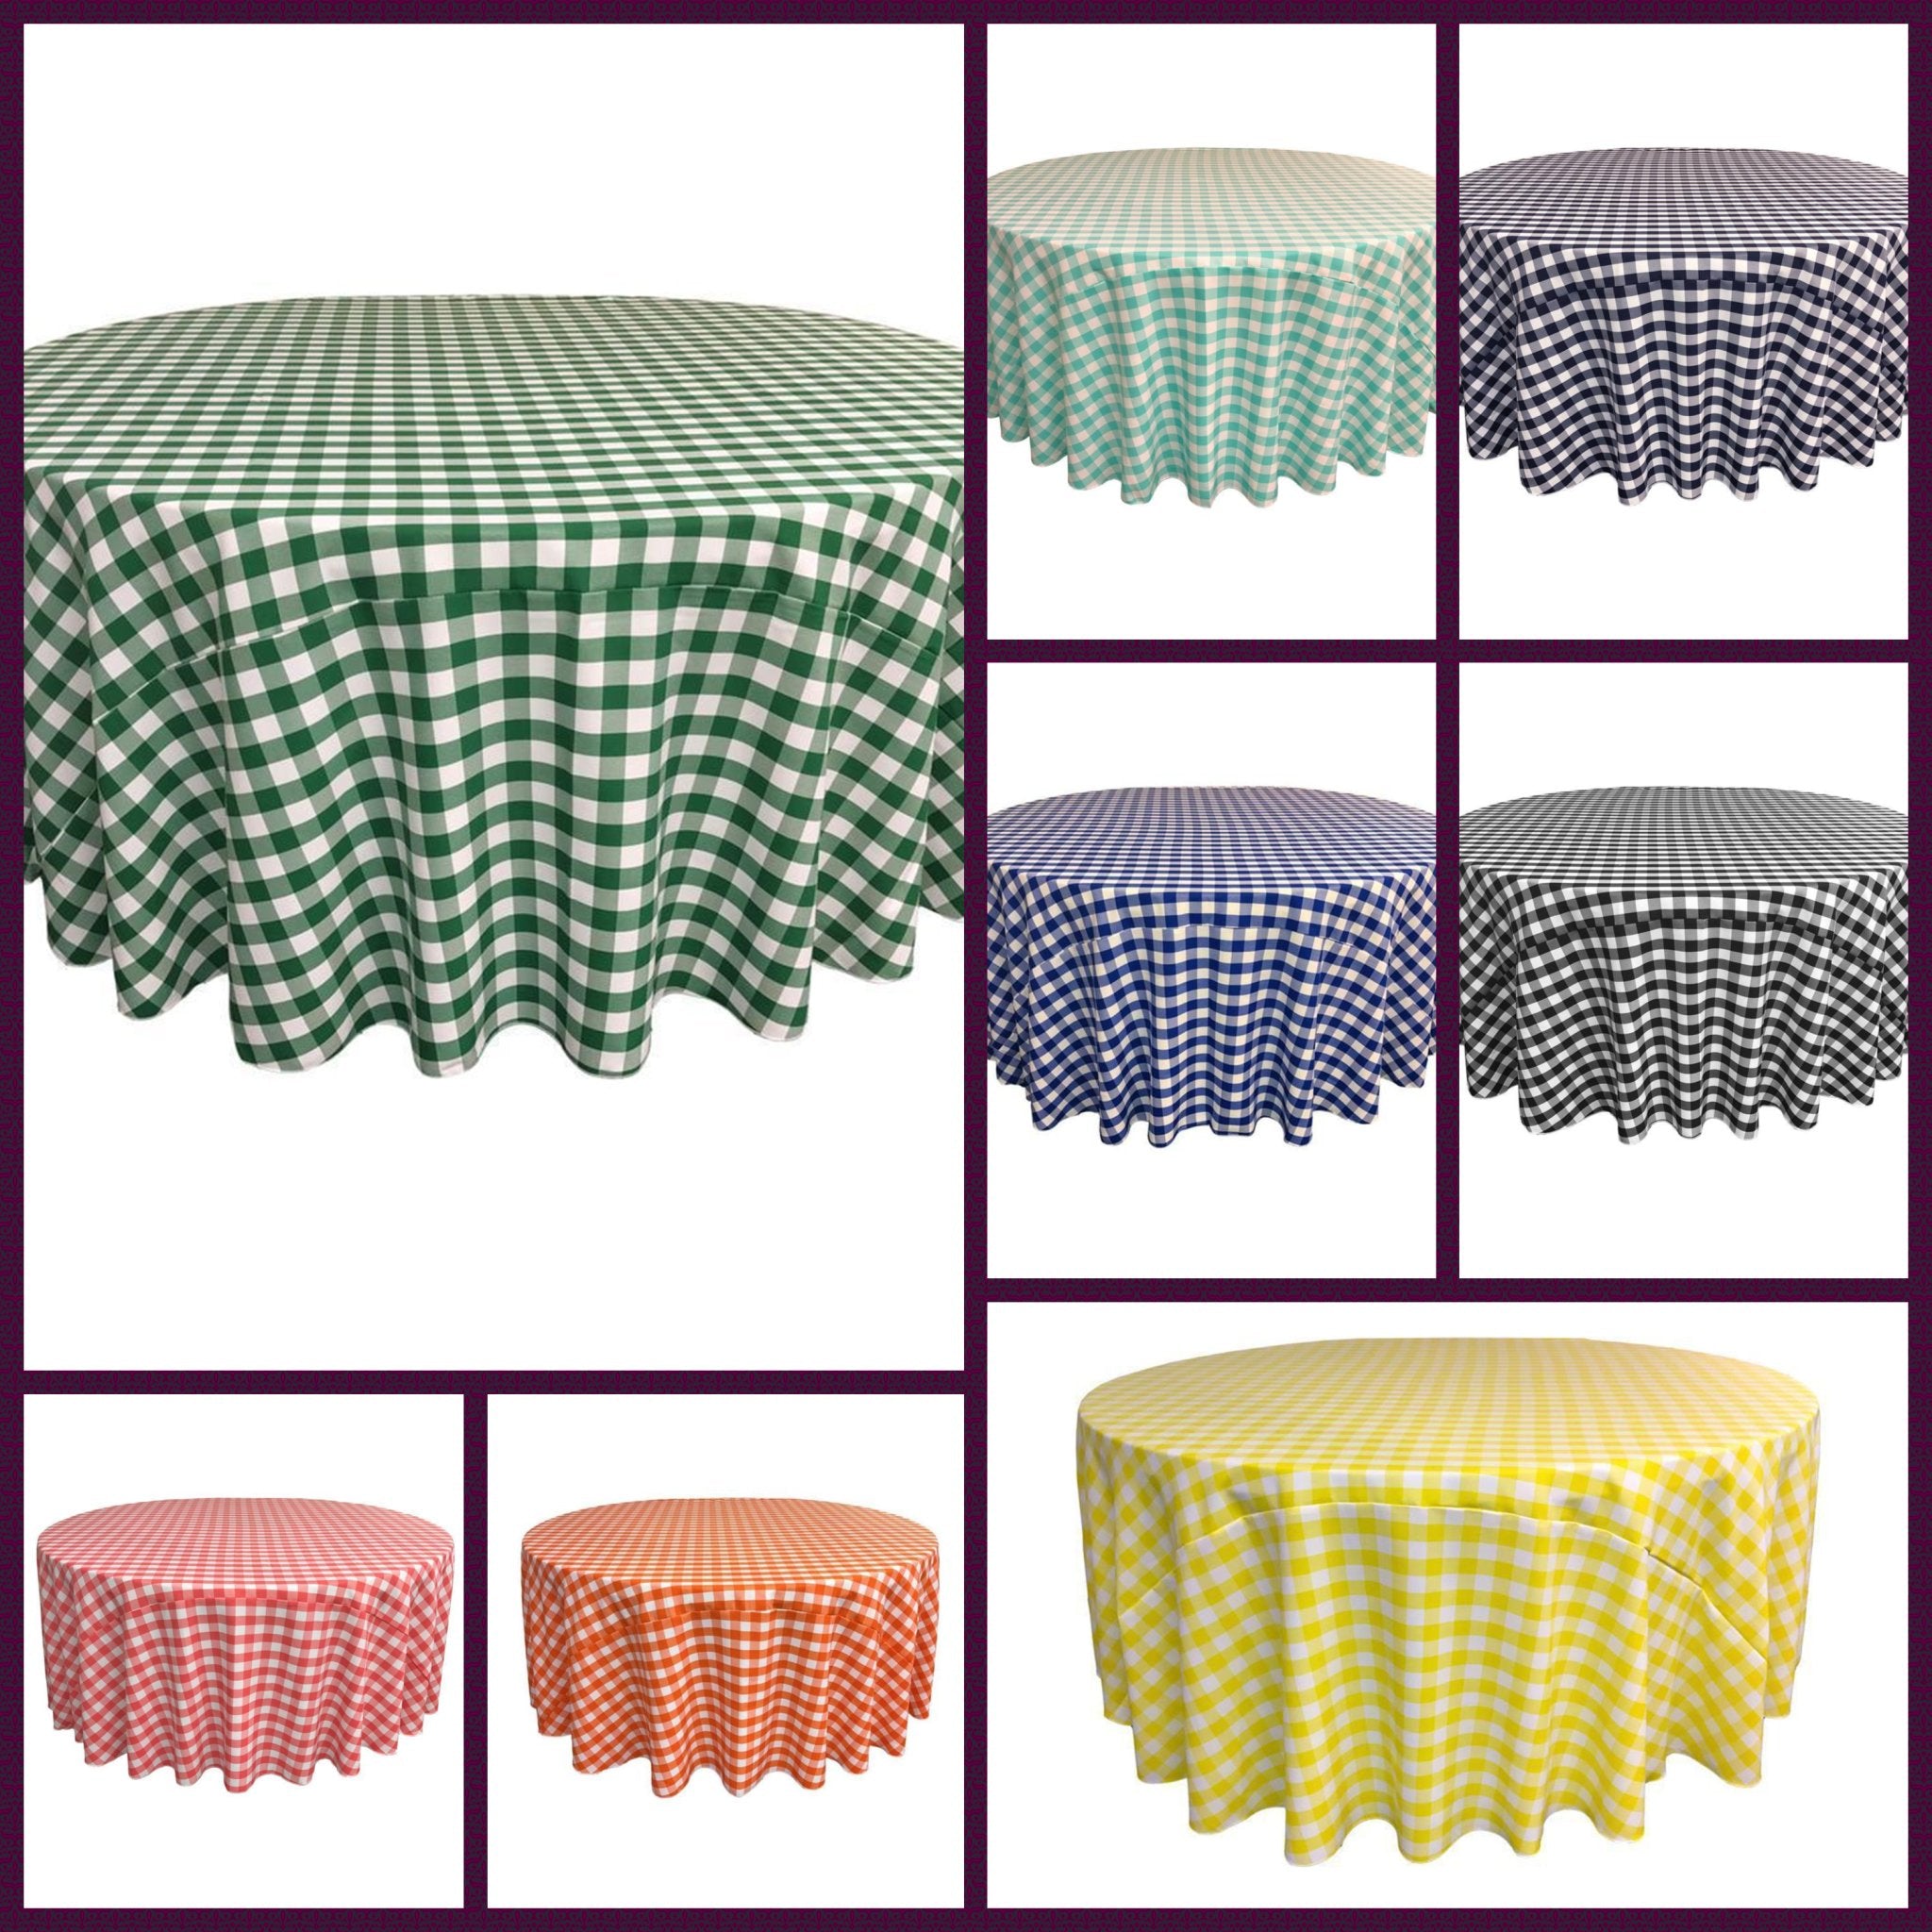 LA Linen Polyester Checkered Round Tablecloth 120 Inches FabricICEFABRICICE FABRICSBlack1LA Linen Polyester Checkered Round Tablecloth 120 Inches Fabric ICEFABRIC